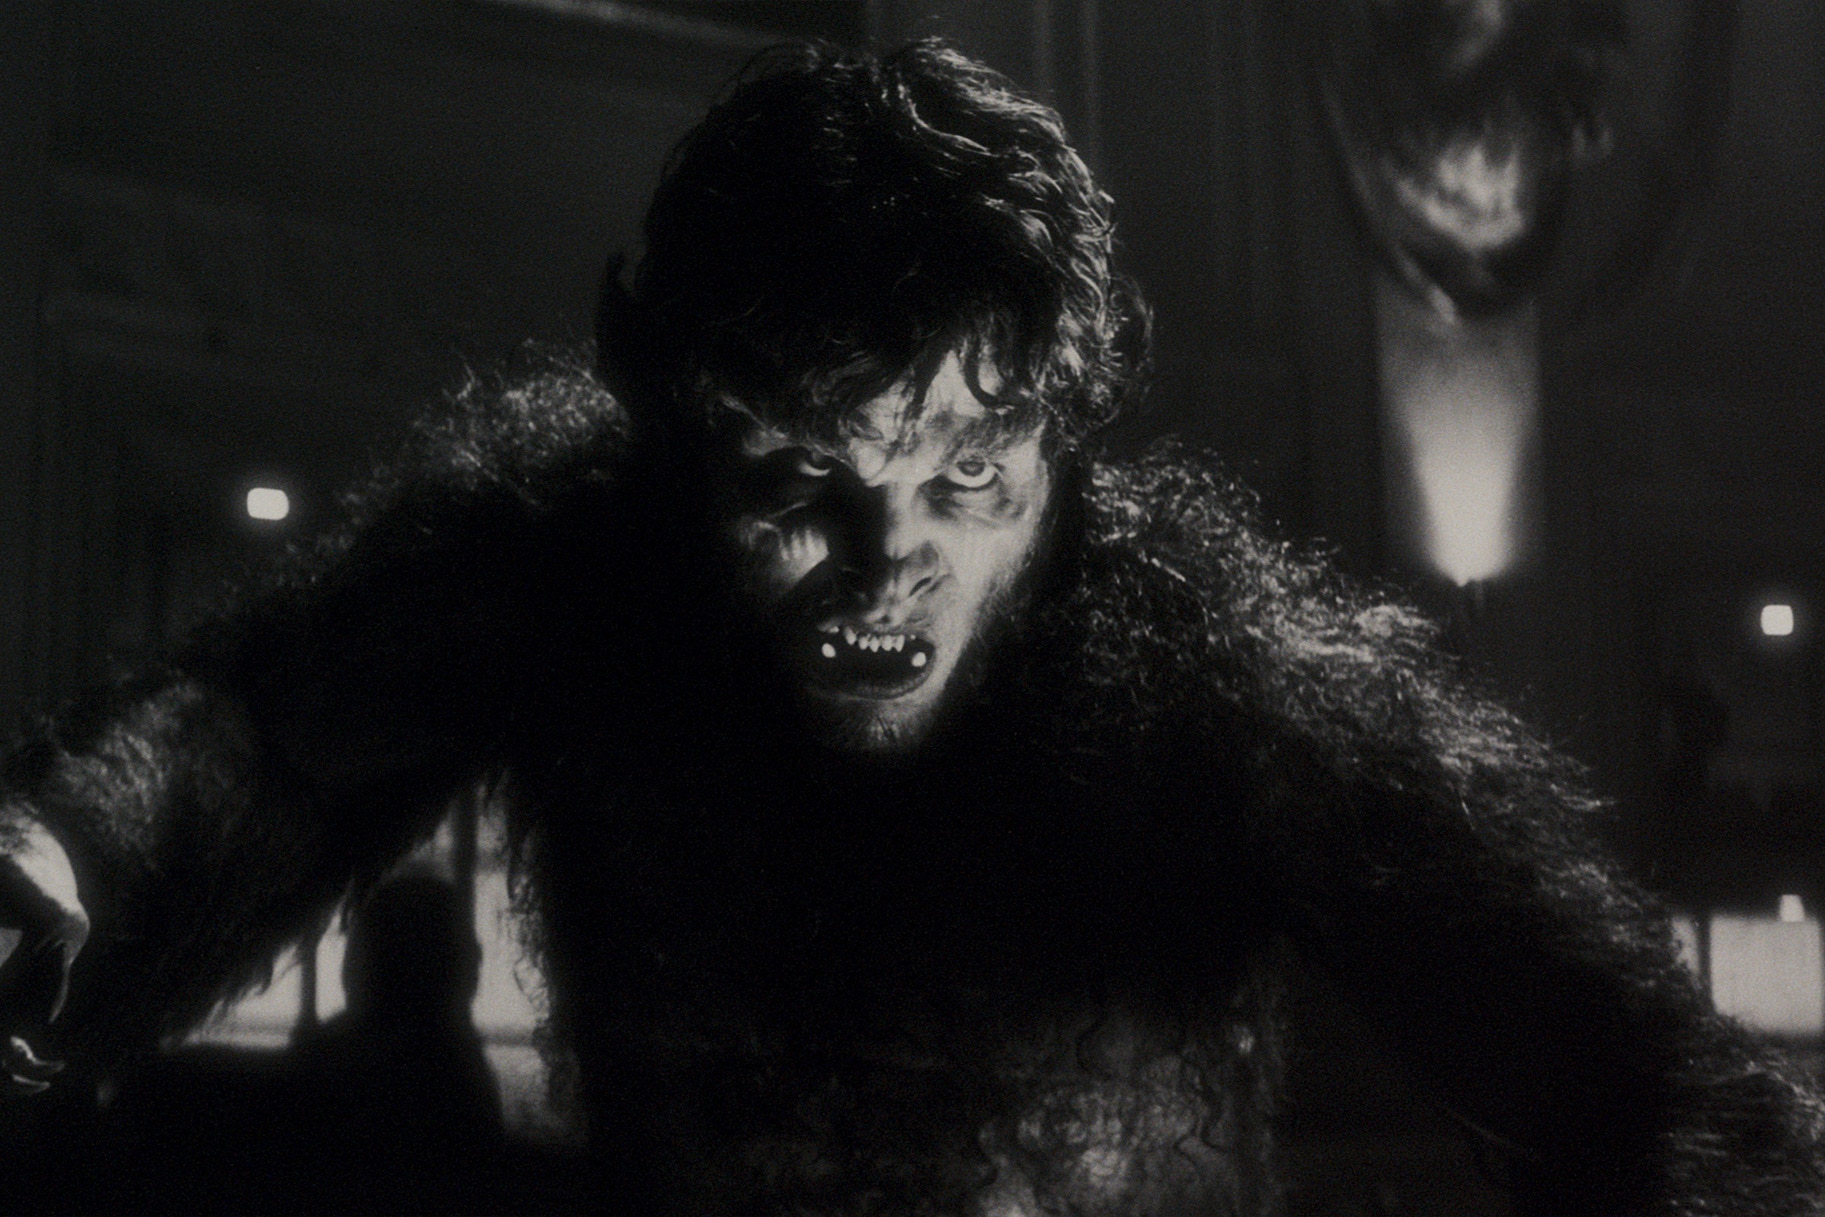 Werewolf by Night: Gael García Bernal Talks Marvel's First Horror